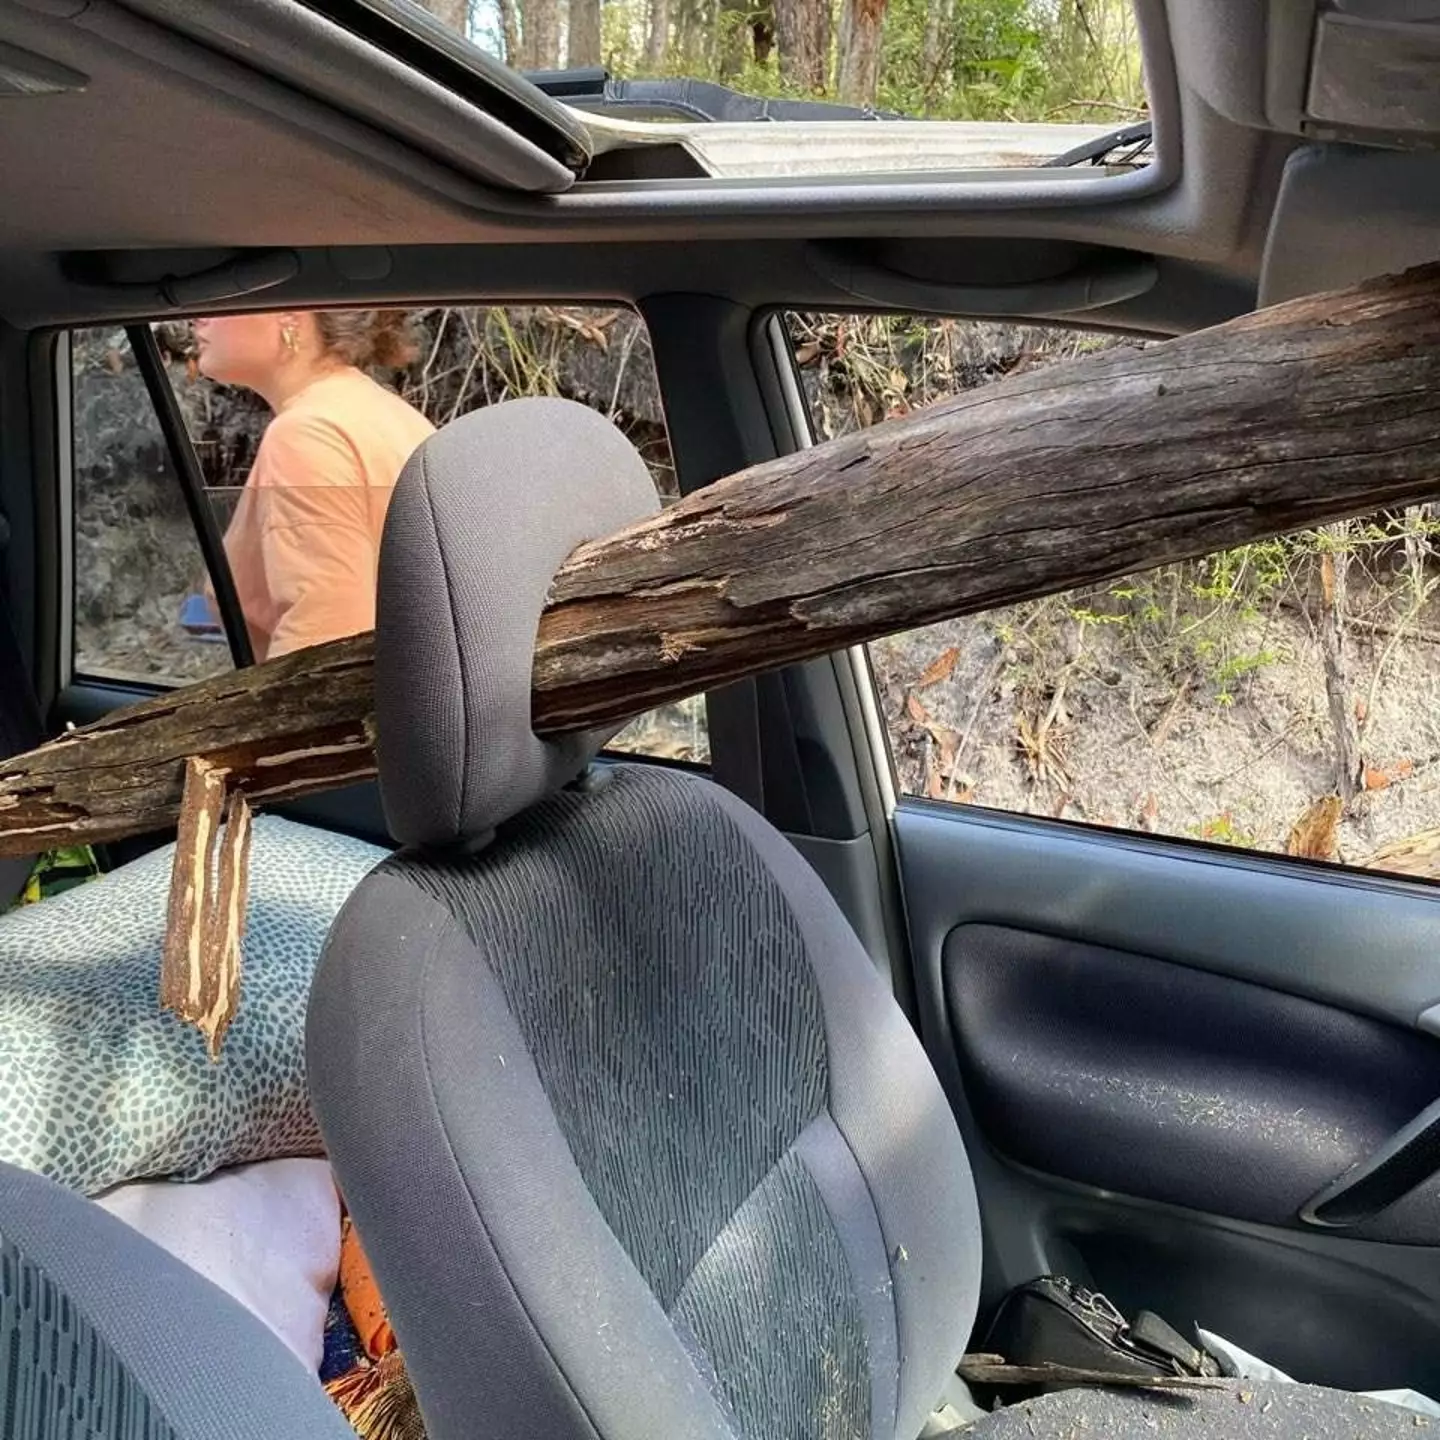 The tree branch went straight through the passenger seat headrest.